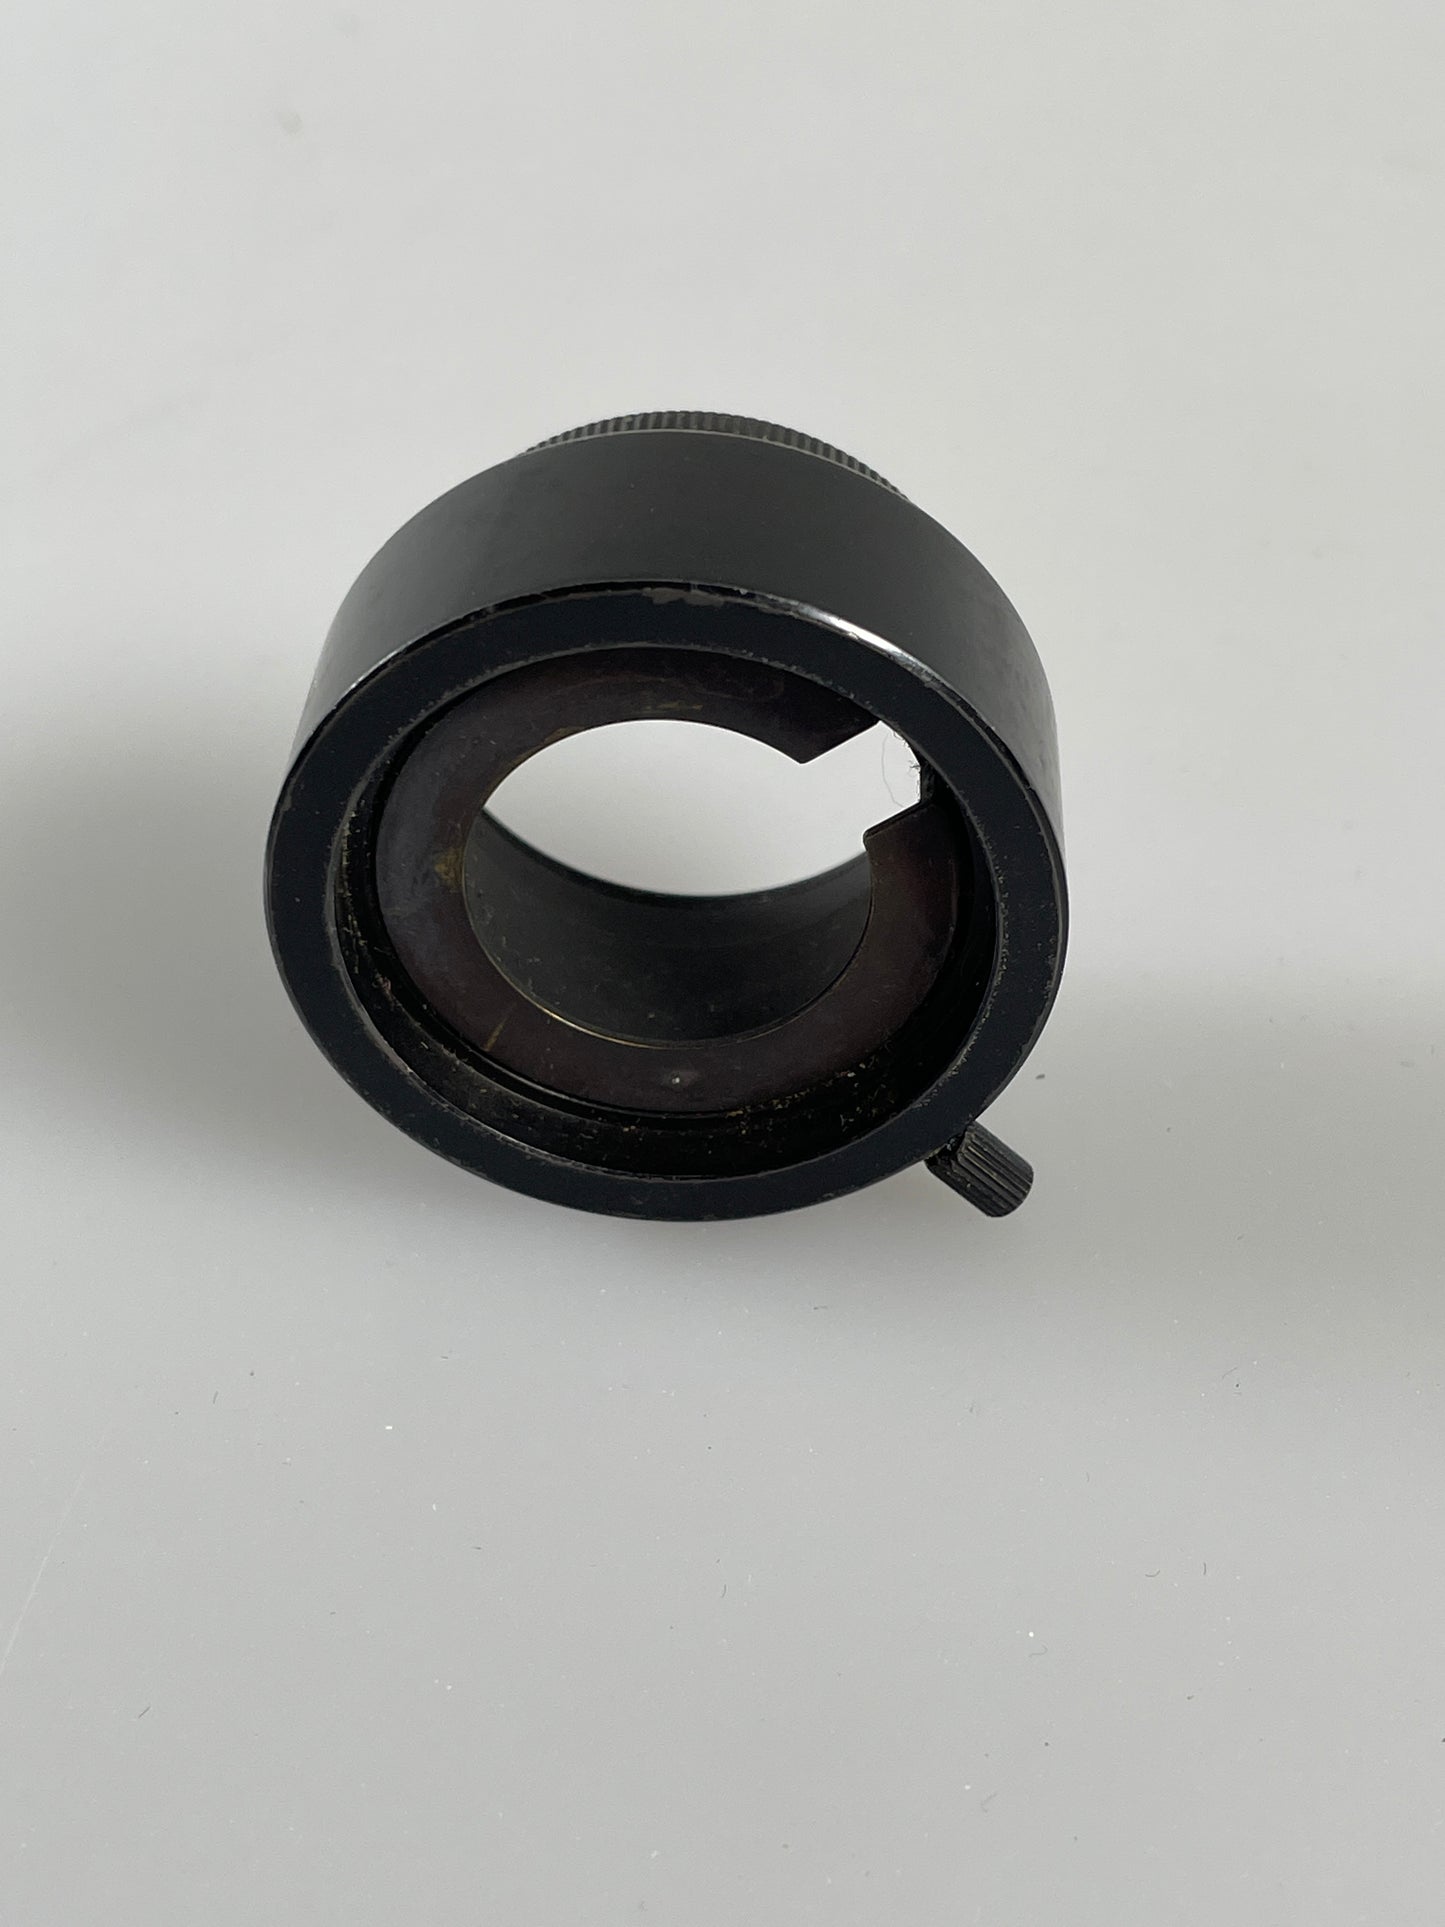 Leitz Wetzlar VALOO Lens Hood w/ Aperture Control for 5cm Elmar